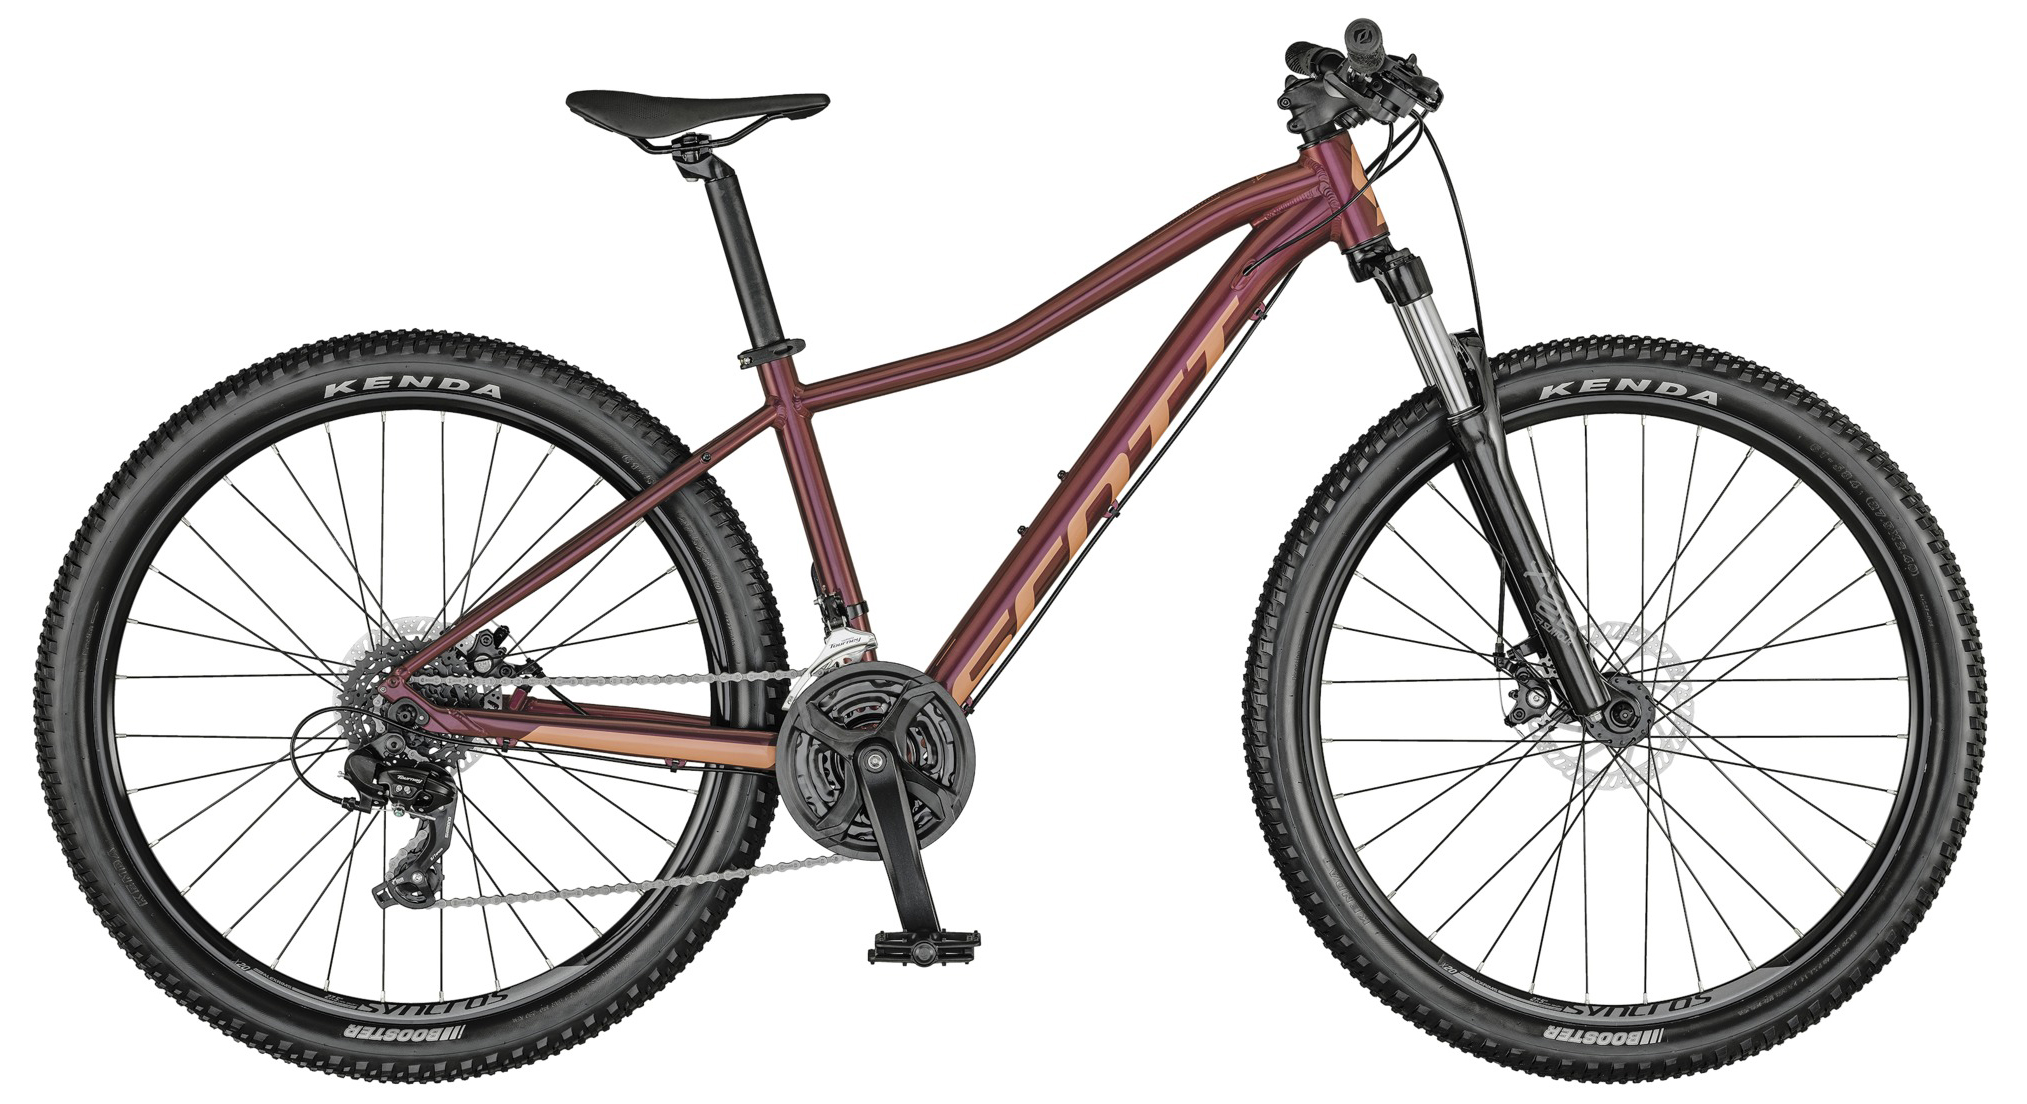  Отзывы о Женском велосипеде Scott Contessa Active 60 27.5 (2021) 2021